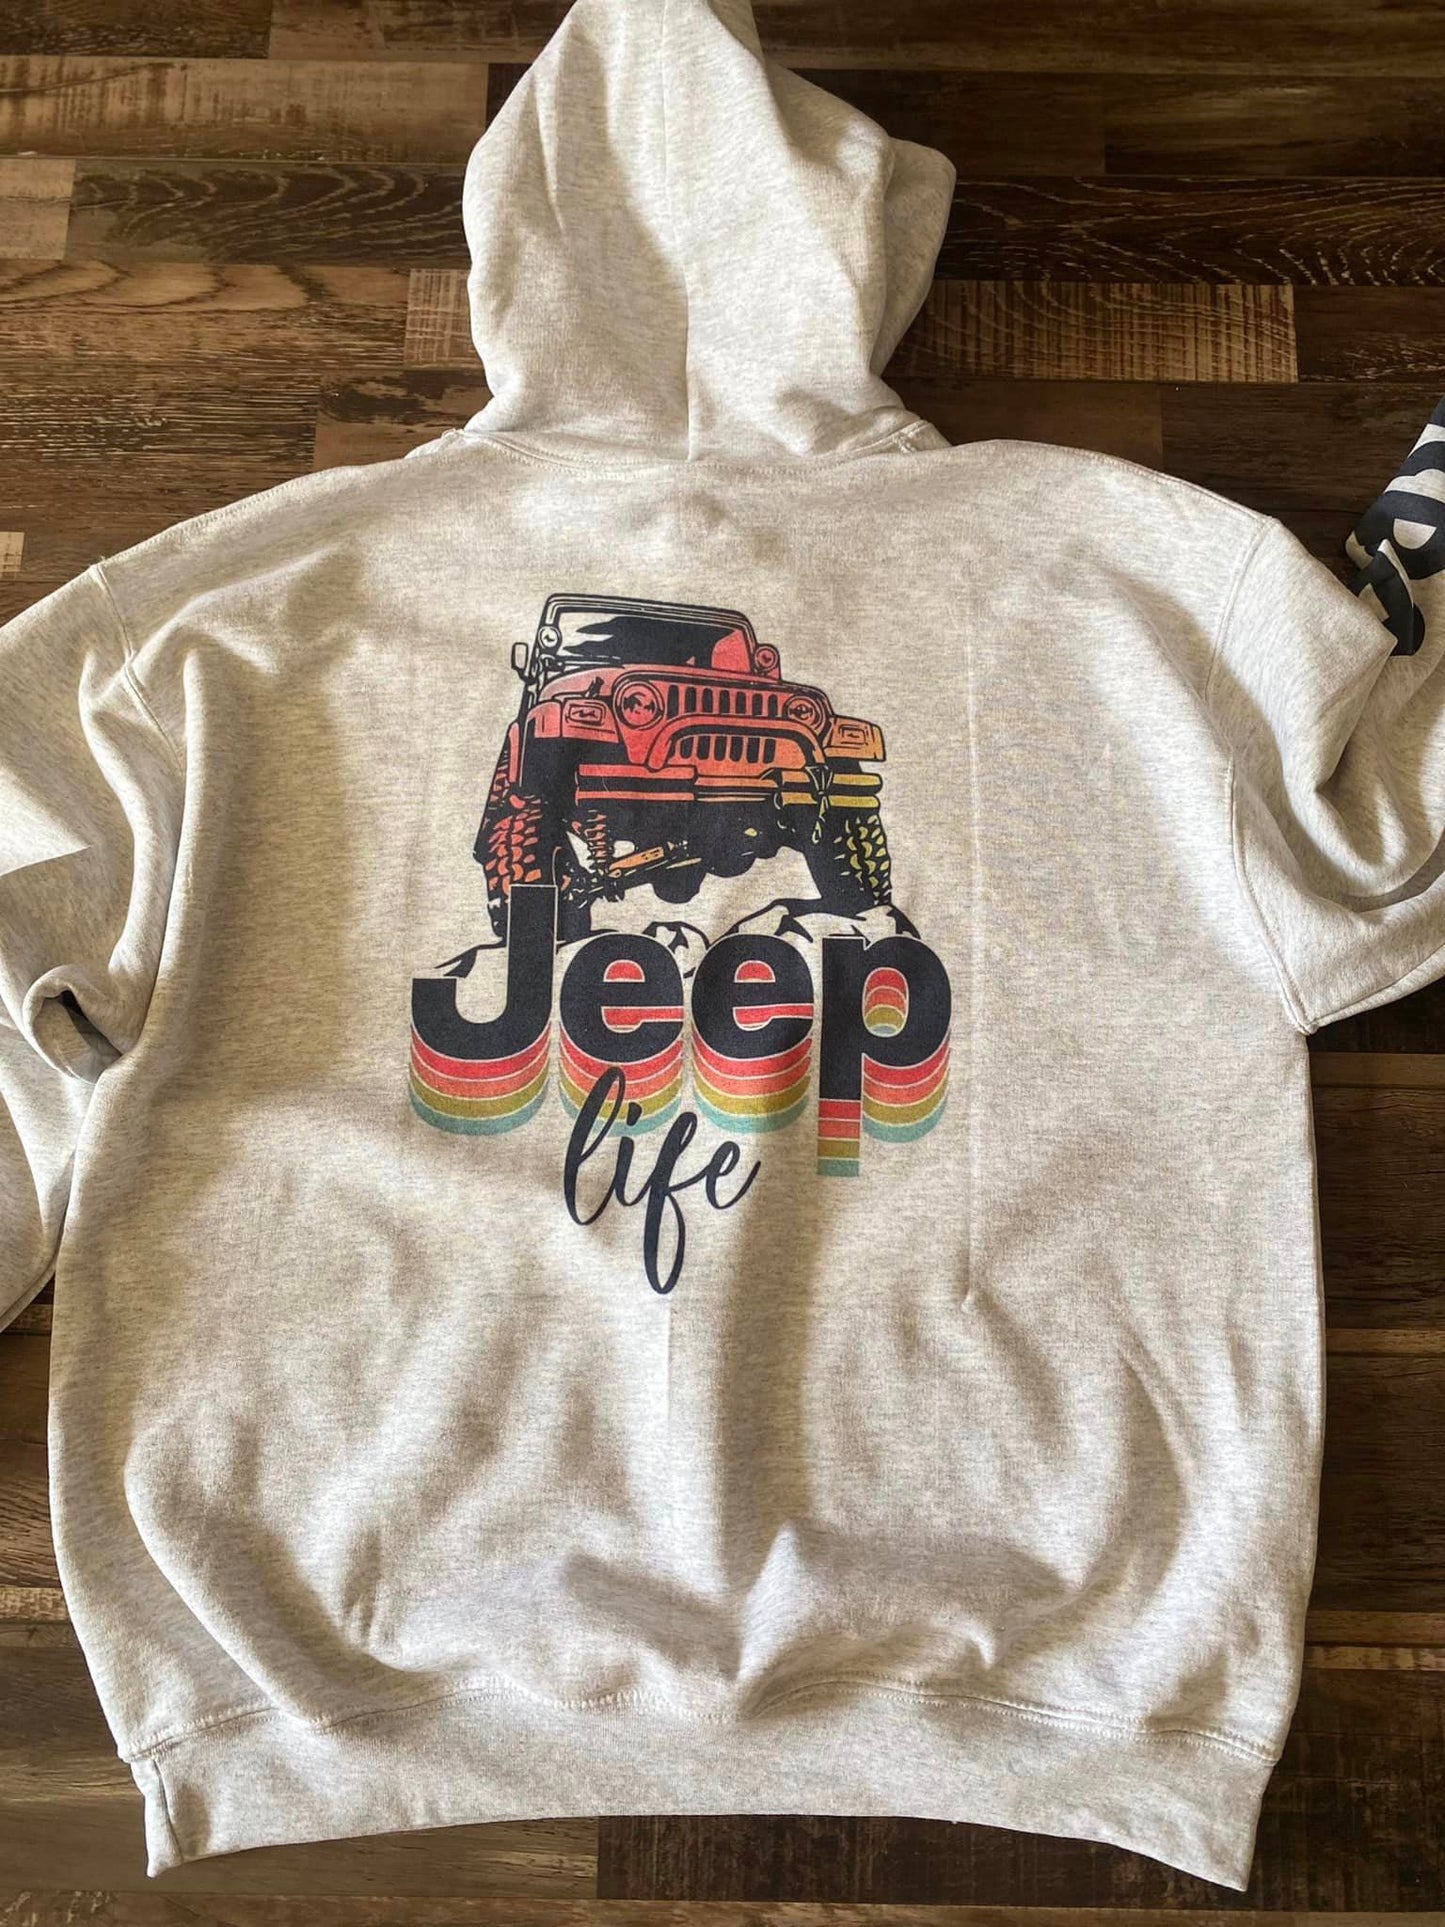 Jeep life hoode